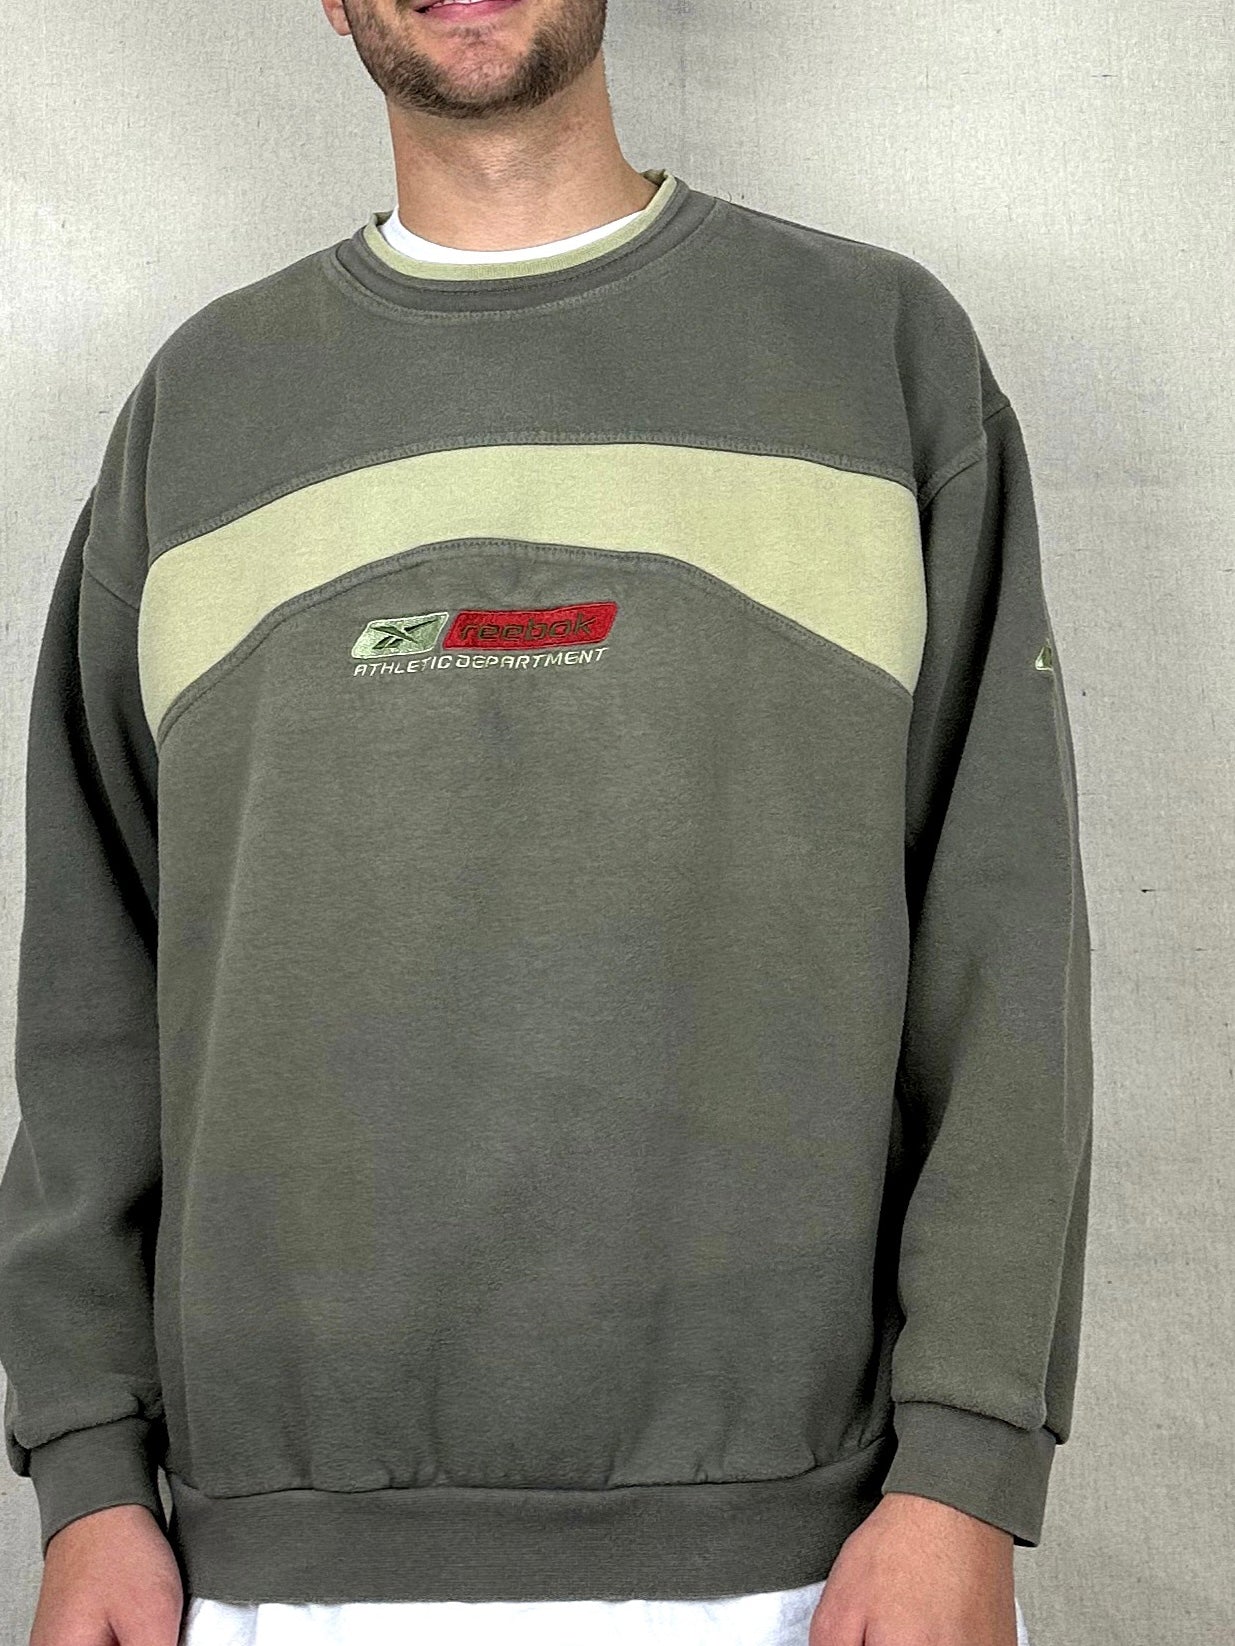 90's Reebok Embroidered Vintage Sweatshirt Size 14